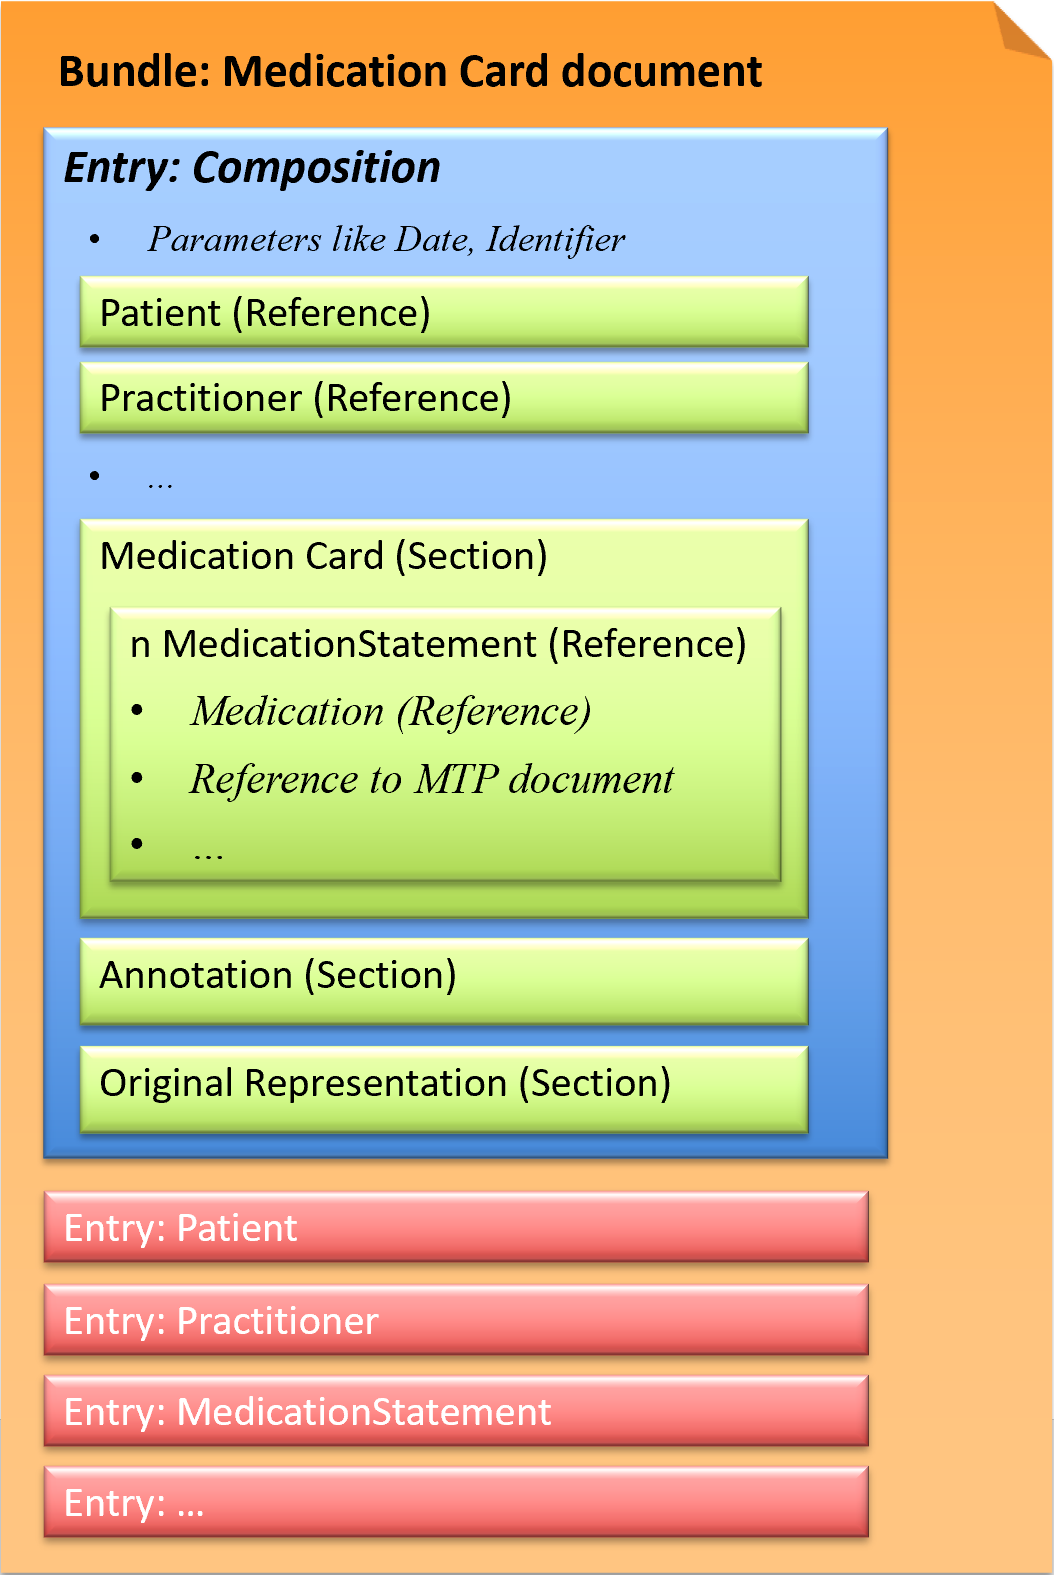 Fig.: Medication Card document